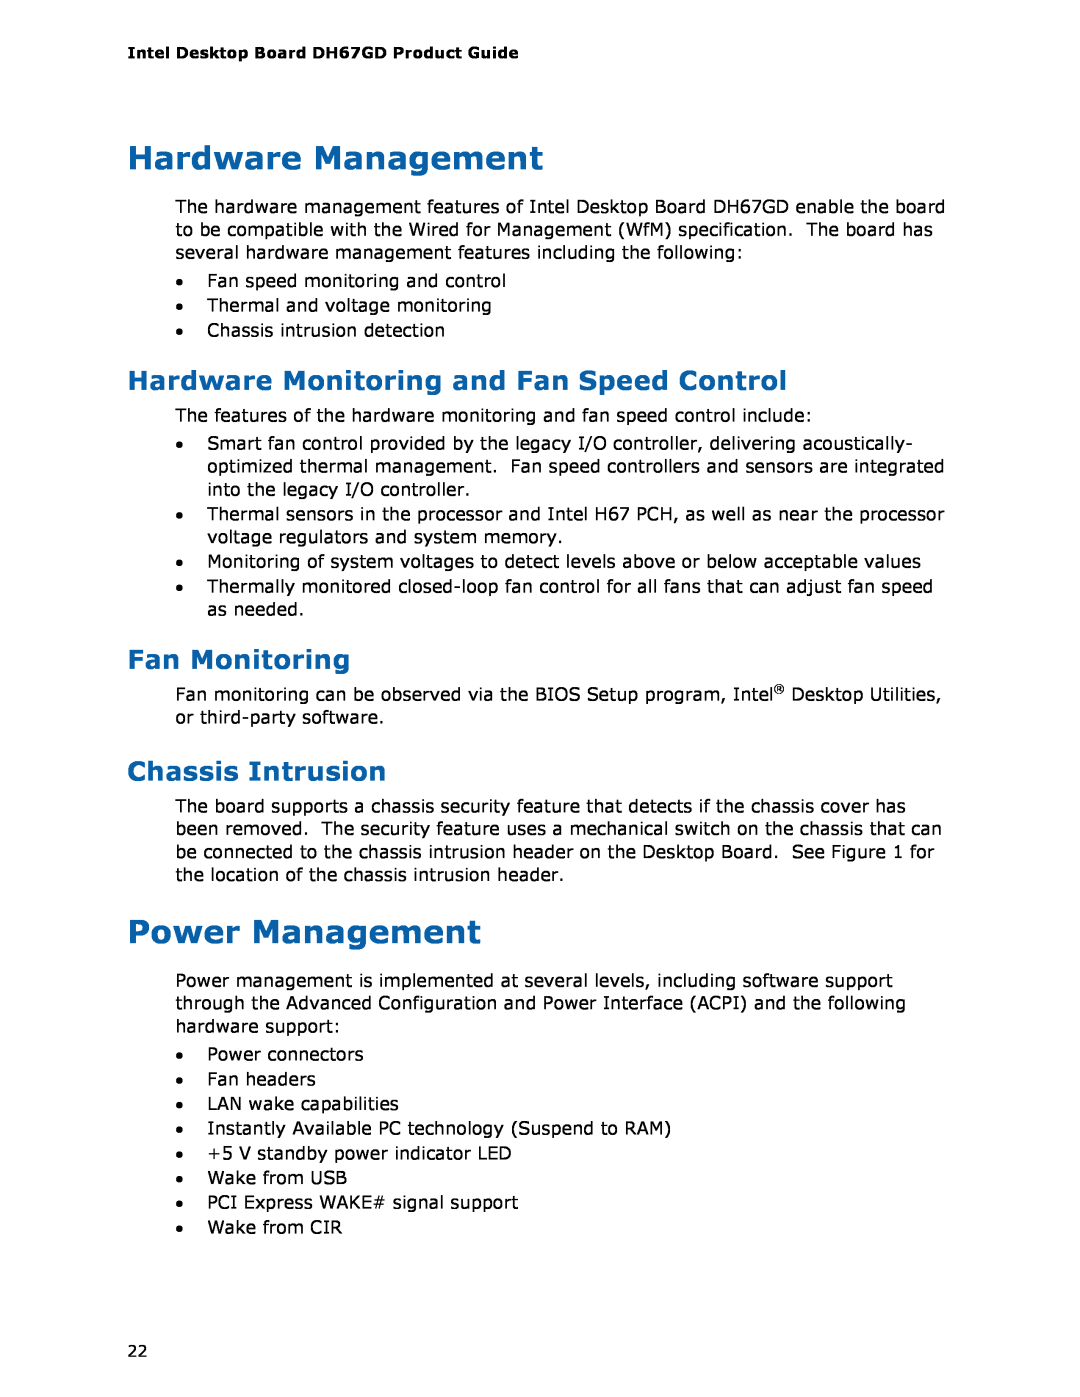 Intel BLKDH67GDB3 manual Hardware Management, Power Management, Hardware Monitoring and Fan Speed Control, Fan Monitoring 